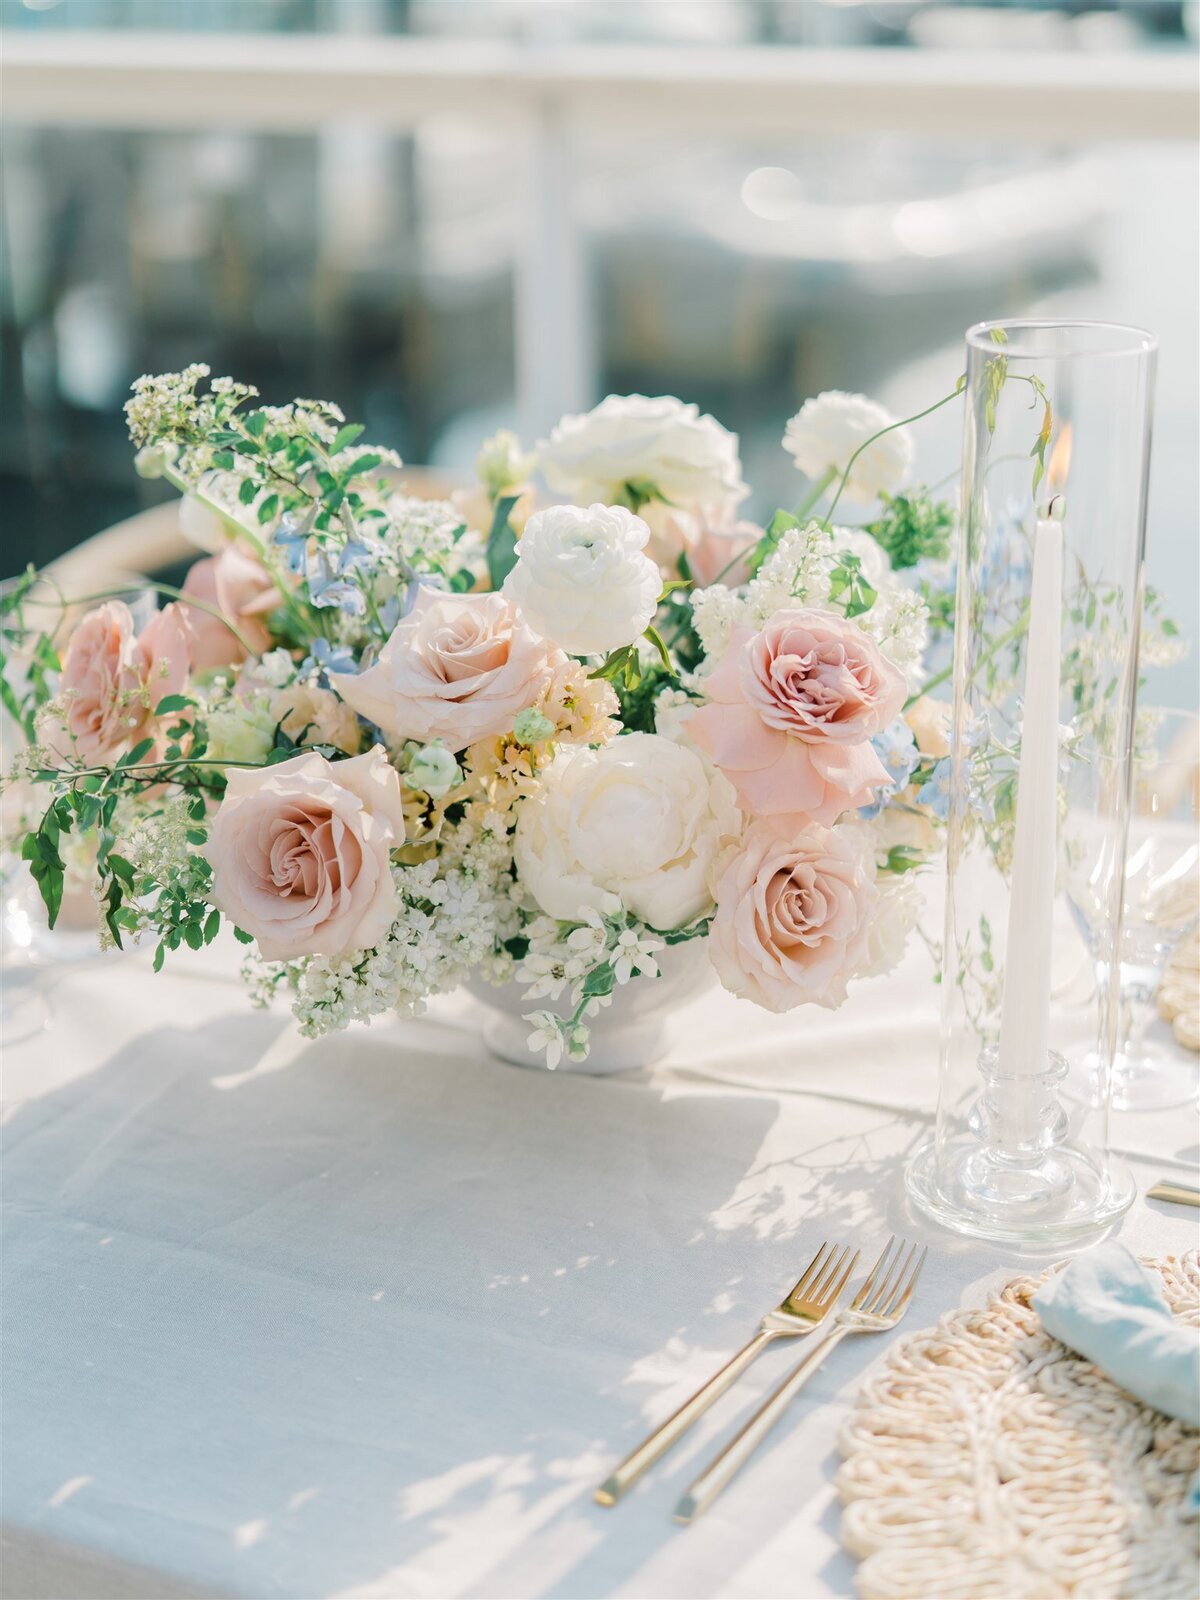 Kate-Murtaugh-Events-wedding-planner-Newport-intimate-outdoor-reception-spring-peonies-floral-centerpieces-boat-dock-marina